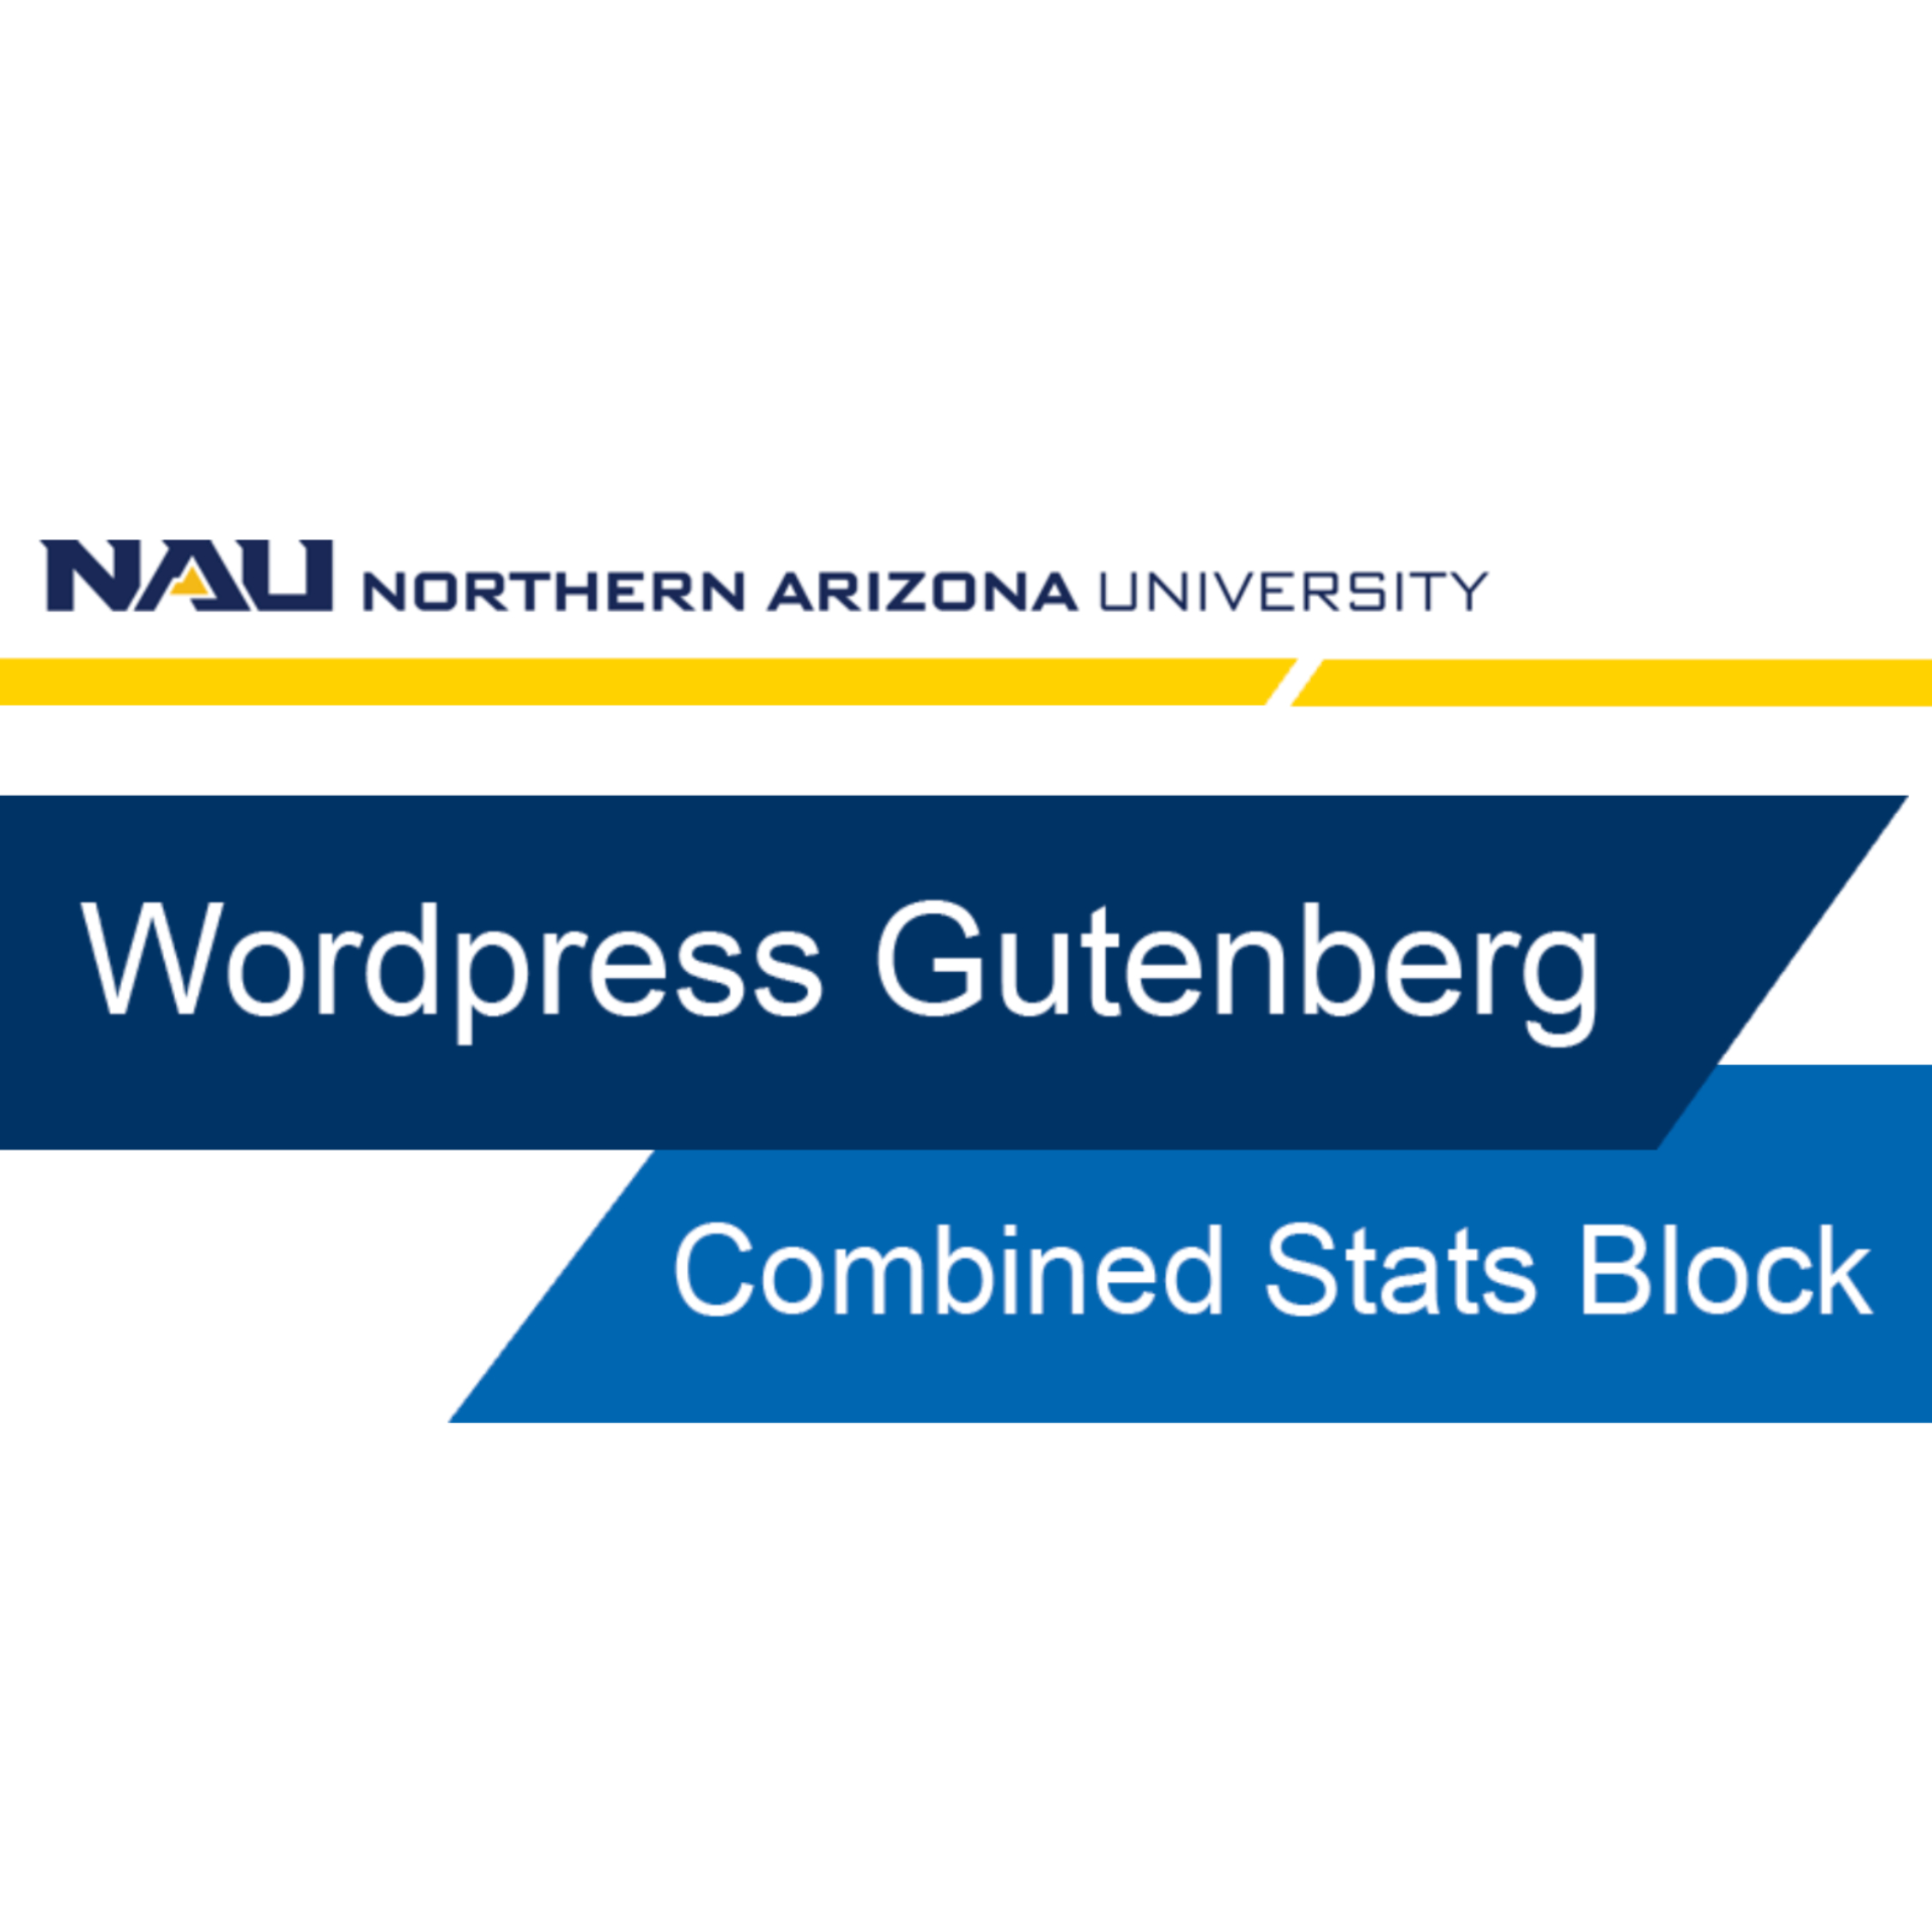 Thumbnail image of the Northern Arizona University WordPress Gutenberg tutorial start page, titled 'Combined Stats Block'.